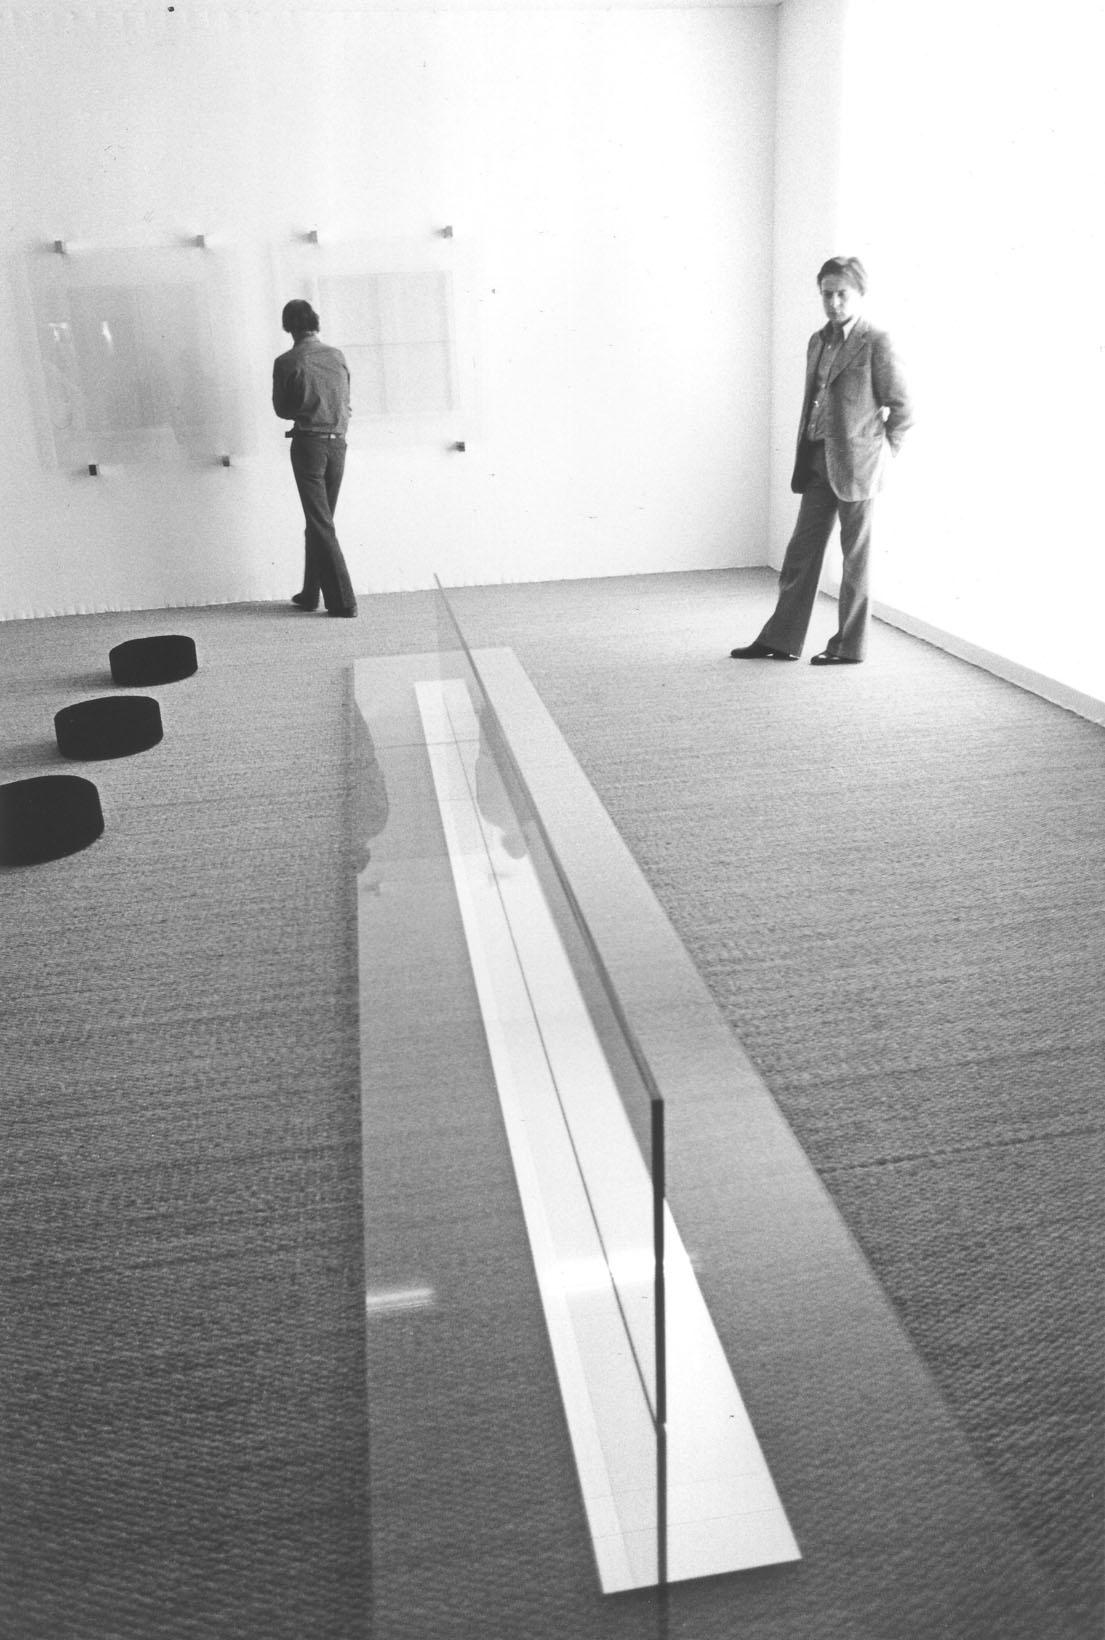 『MA Space-Time in Japan』展（1978-79年、パリ）、倉俣史郎による作品《はし》。磯崎新は倉俣に、2つの空間や物をつなぐものとして「はし」という概念を表した立体作品の制作を依頼した。　photo_Shuji Yamada
